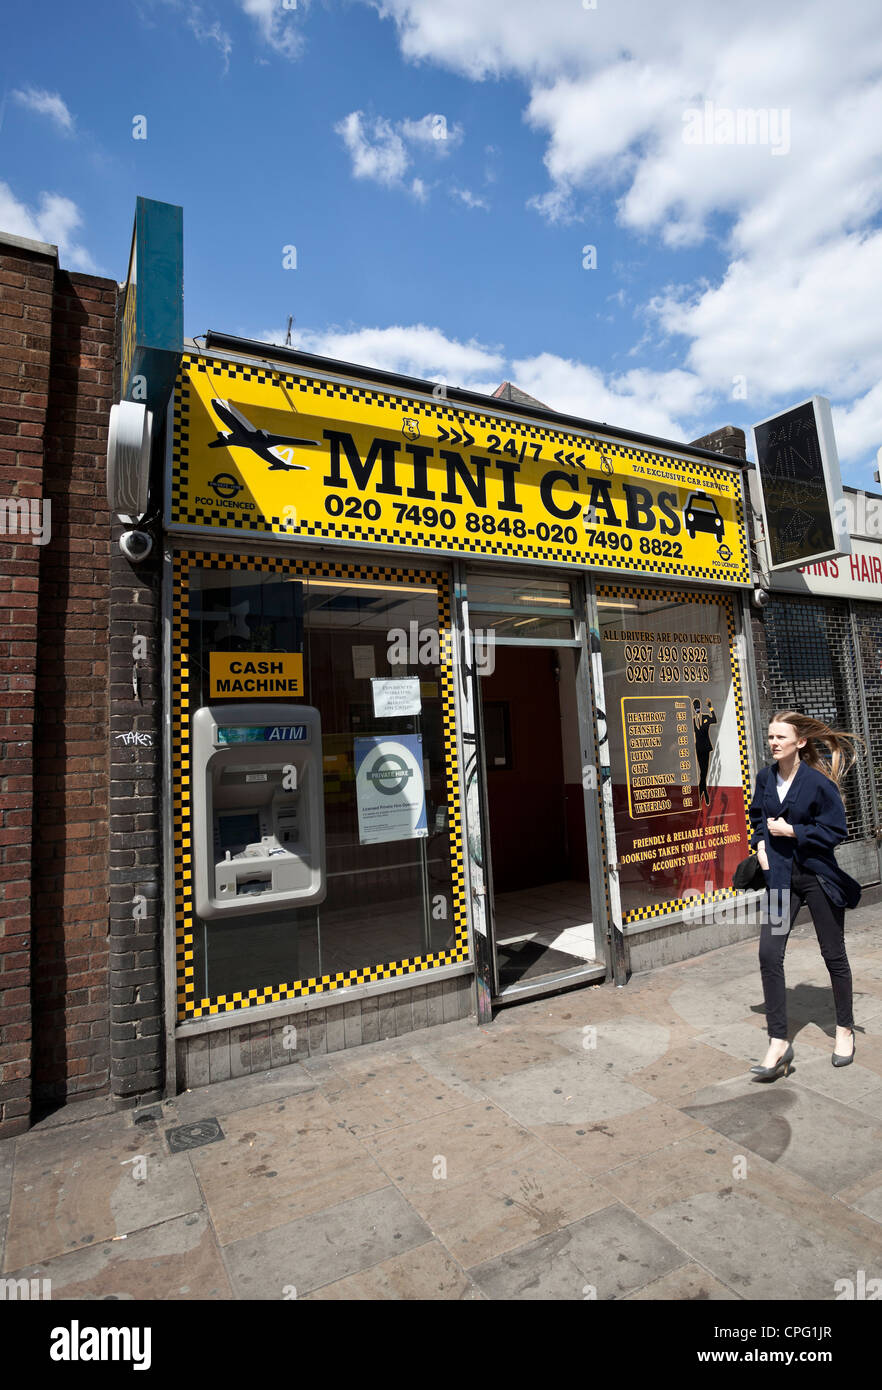 Mini cabs office, Shoreditch, London, England, UK Stock Photo